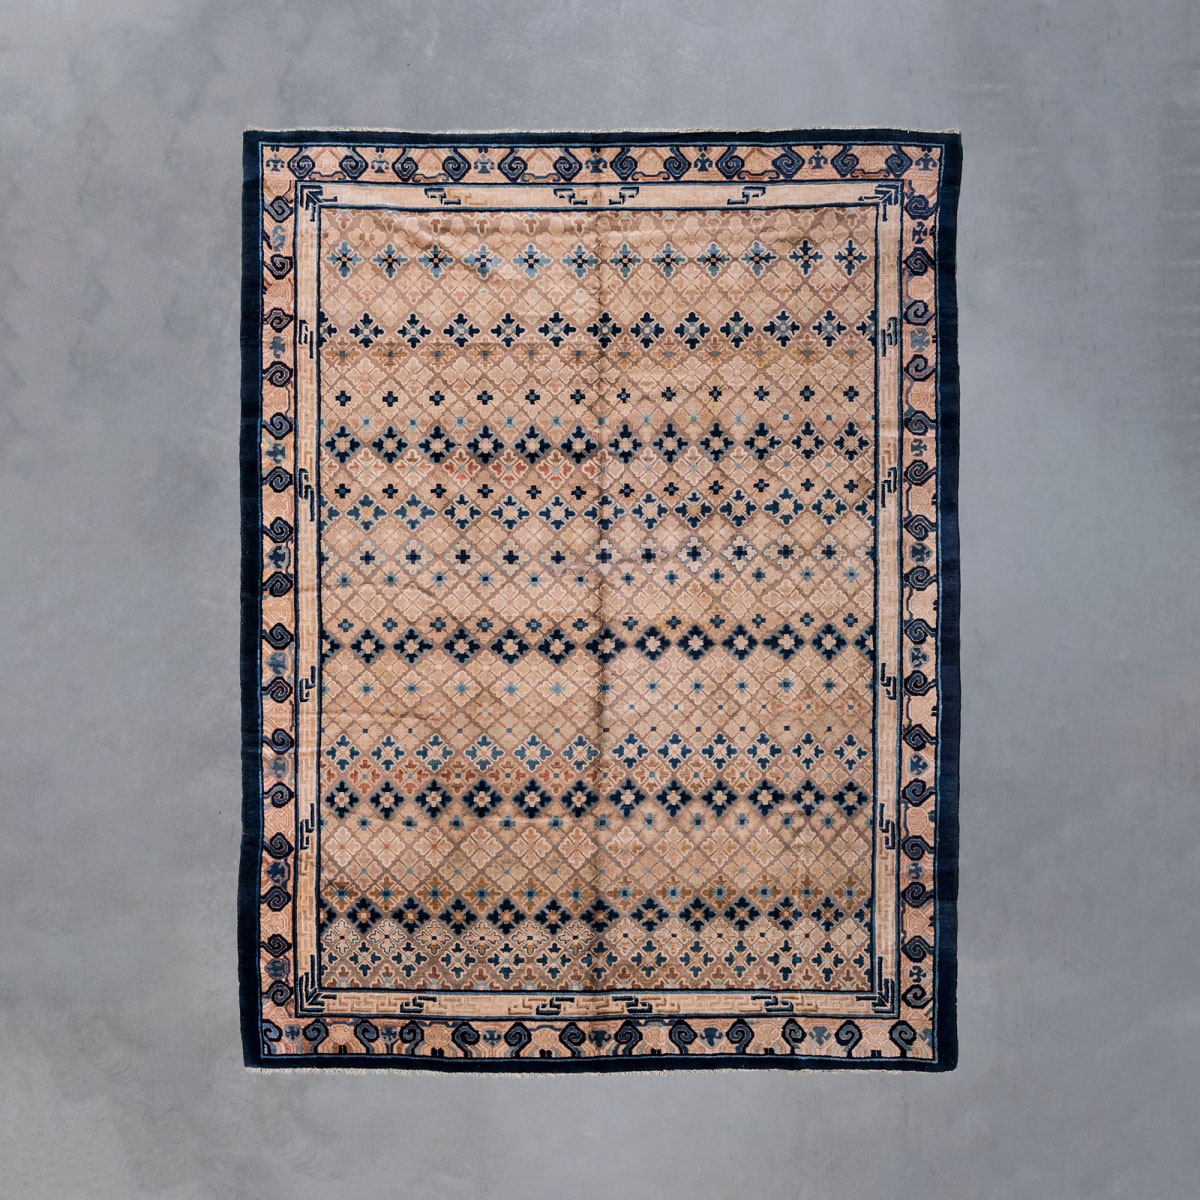 Carpet | 360 x 280 cm Antique carpets - China  pic-1